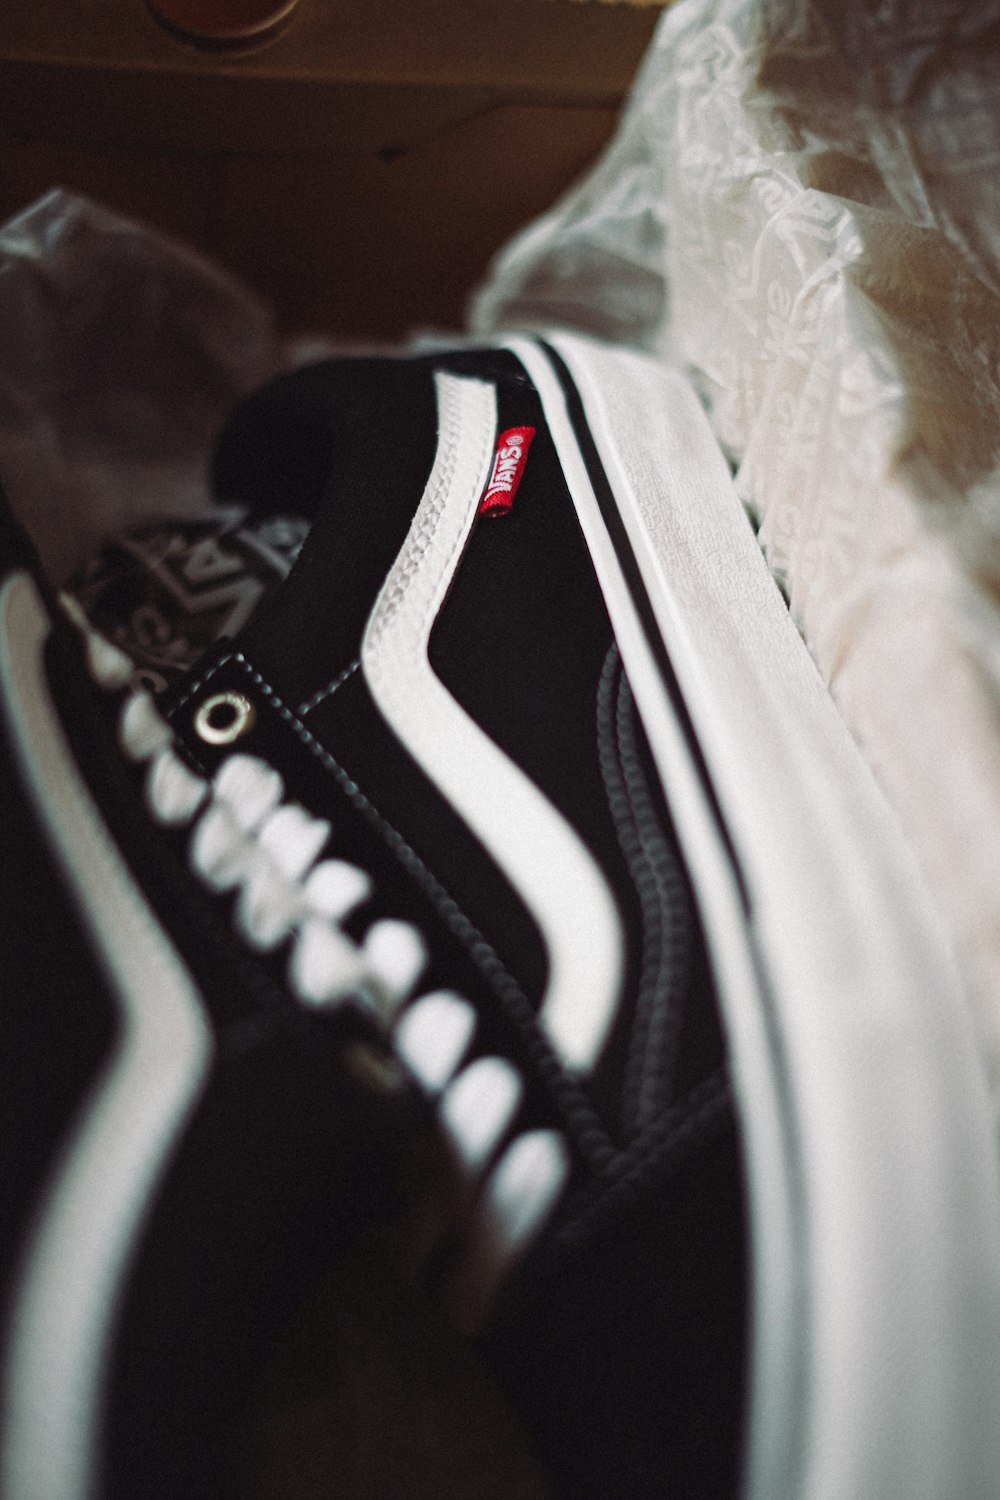 Black and white nike sneakers photo – Free Vans Image on Unsplash